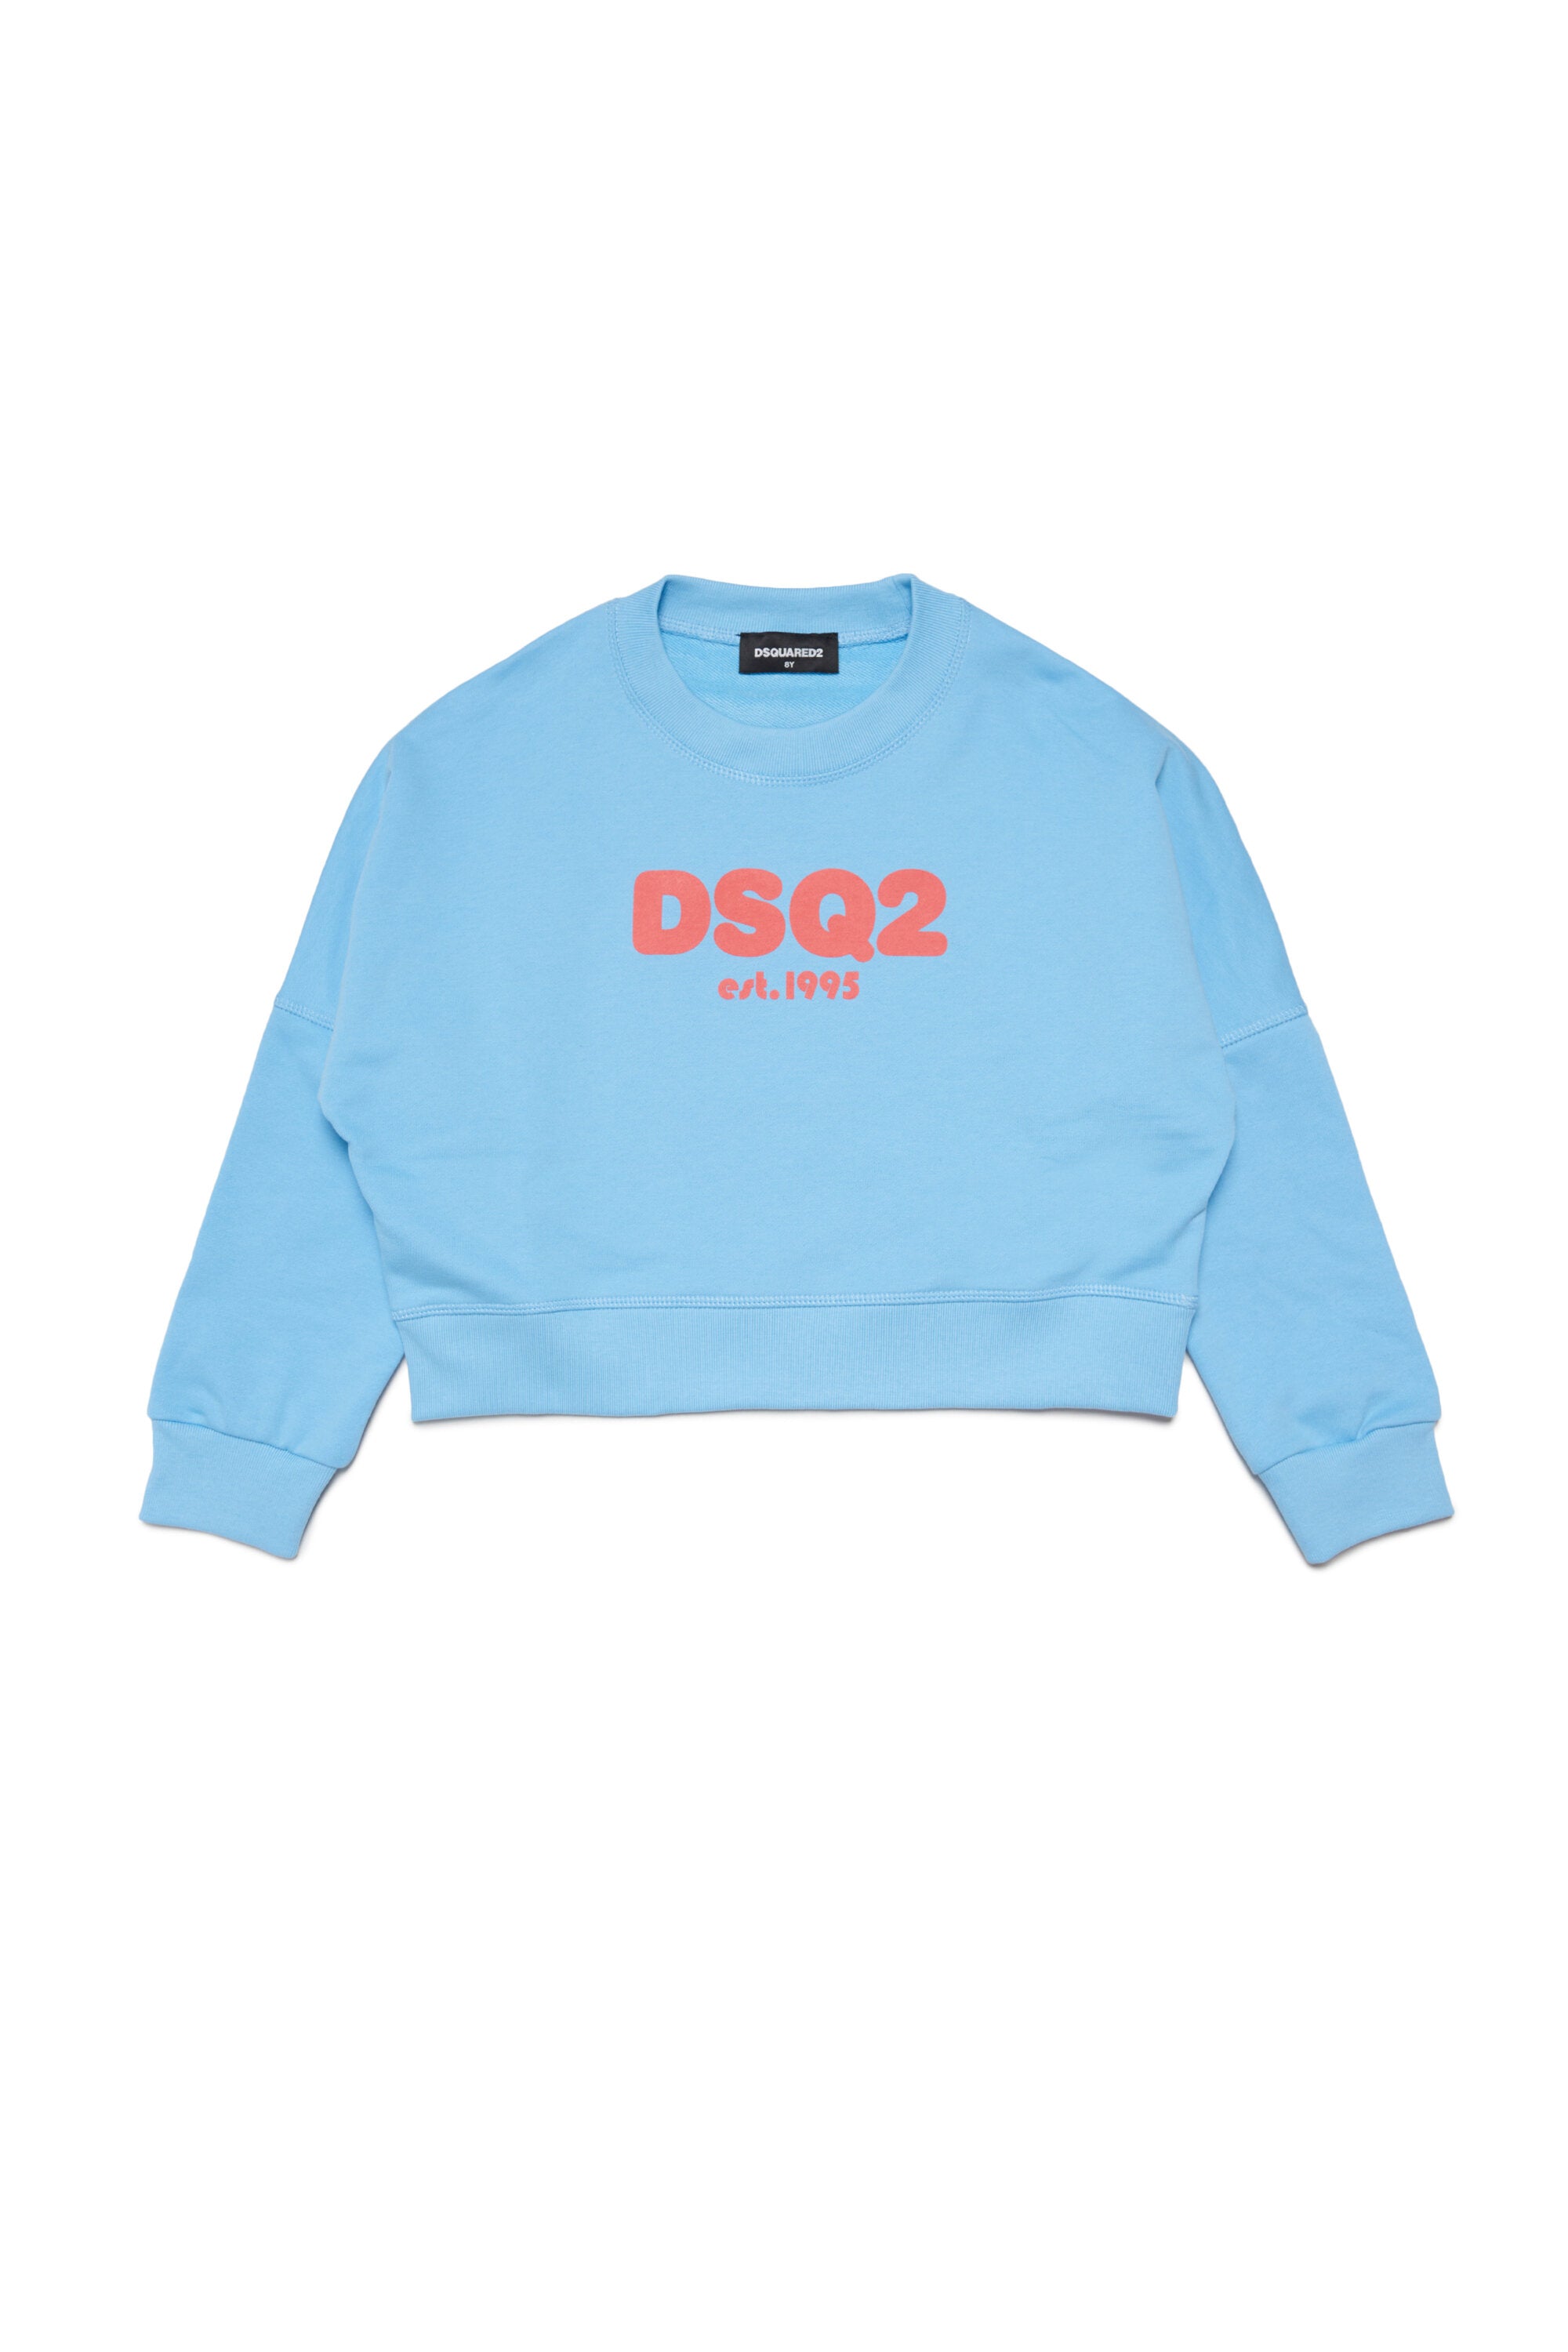 DSQ2 branded cropped sweatshirt est.1995